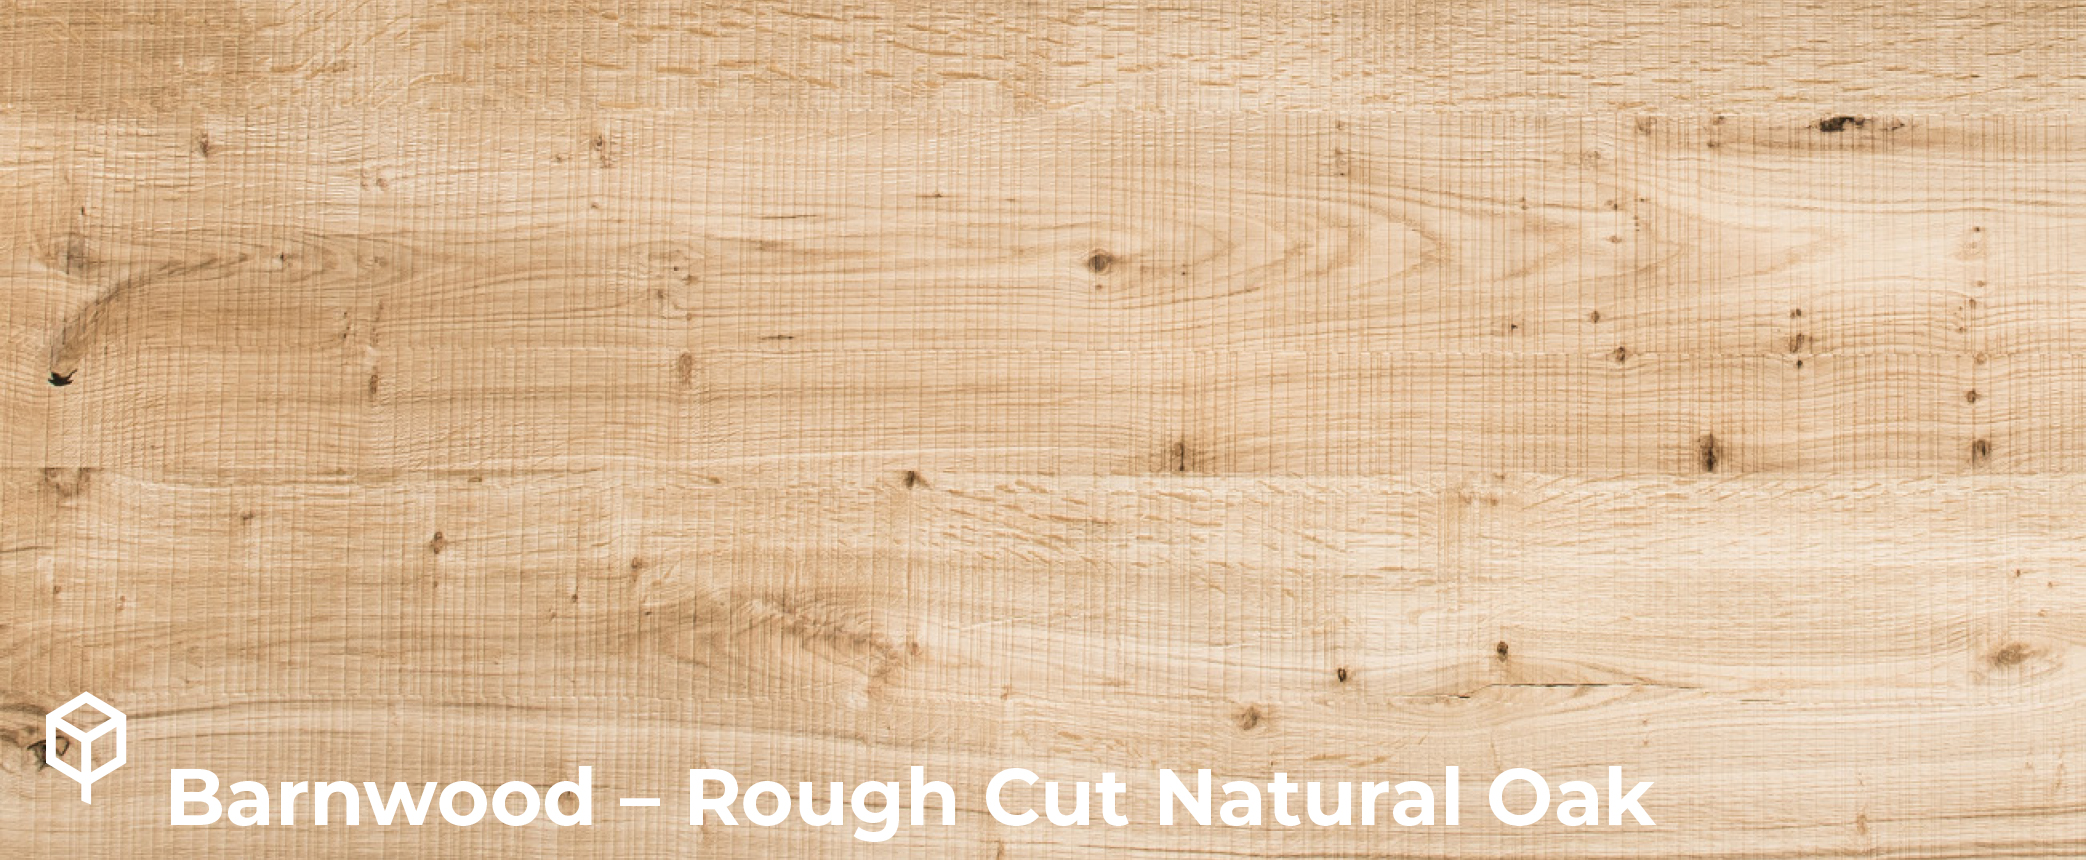 Barnwood_Rough_Cut_Natural_Oak veneer